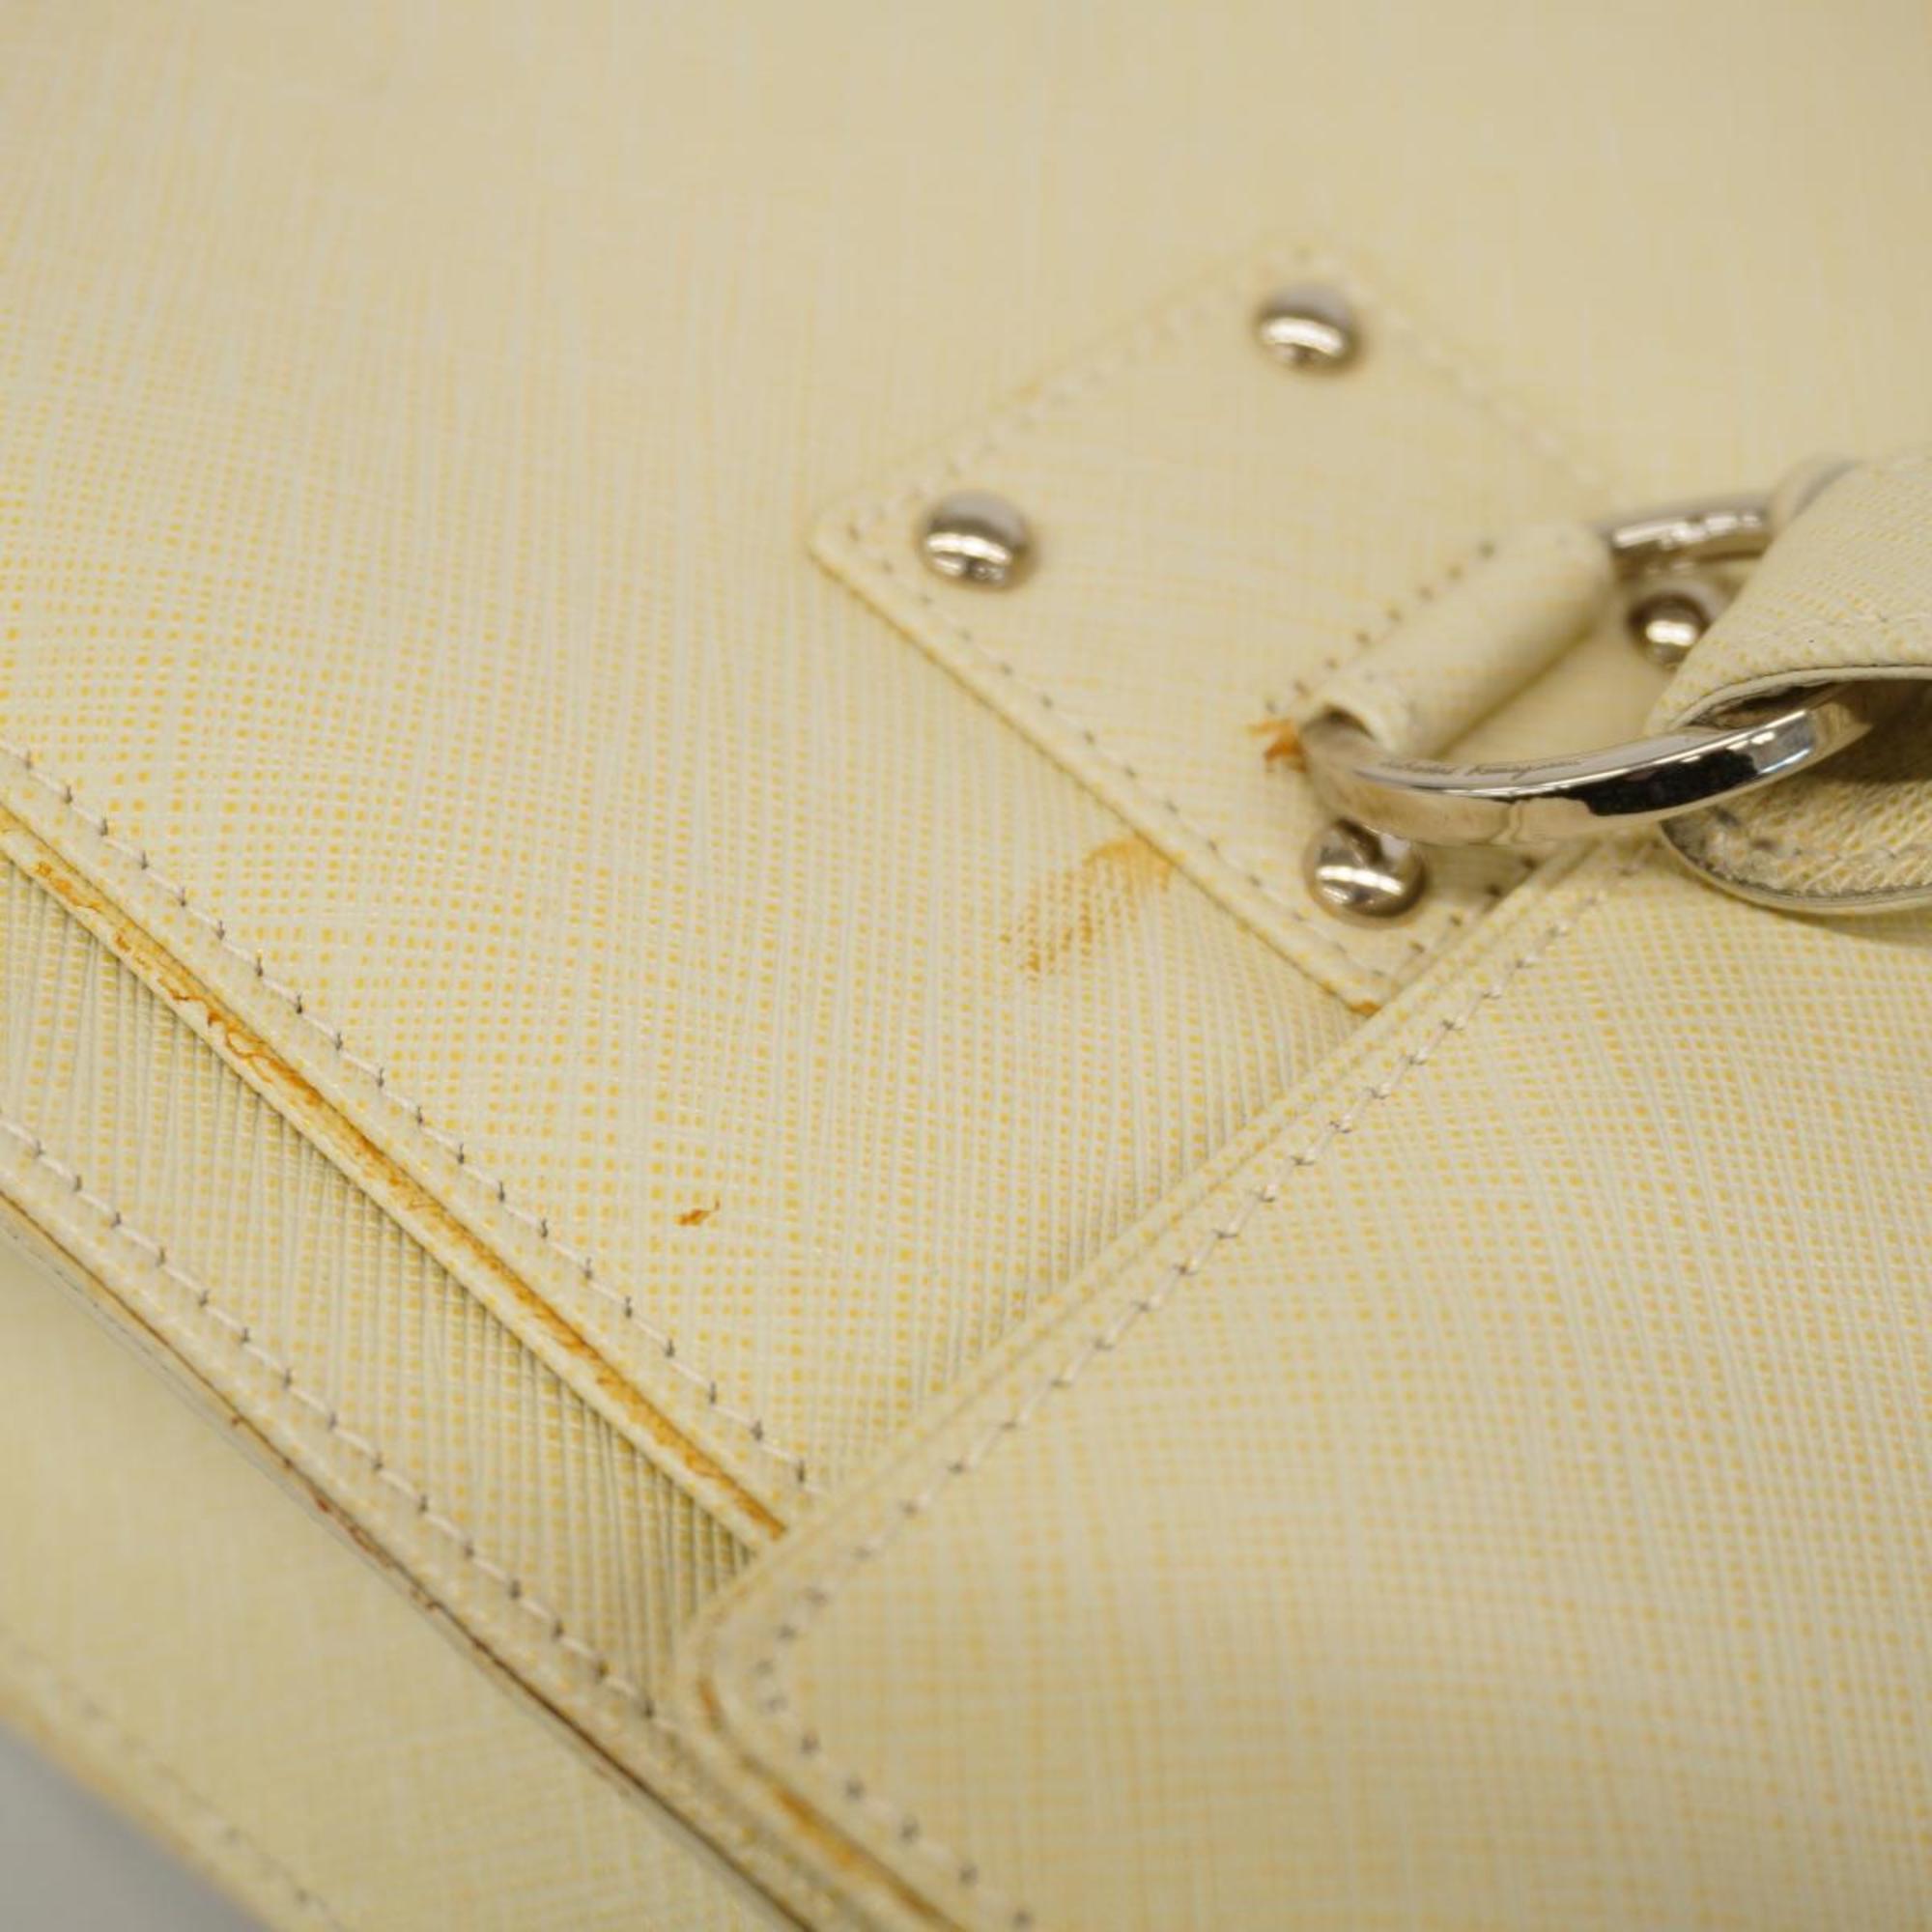 Salvatore Ferragamo Shoulder Bag Gancini Leather Ivory Women's